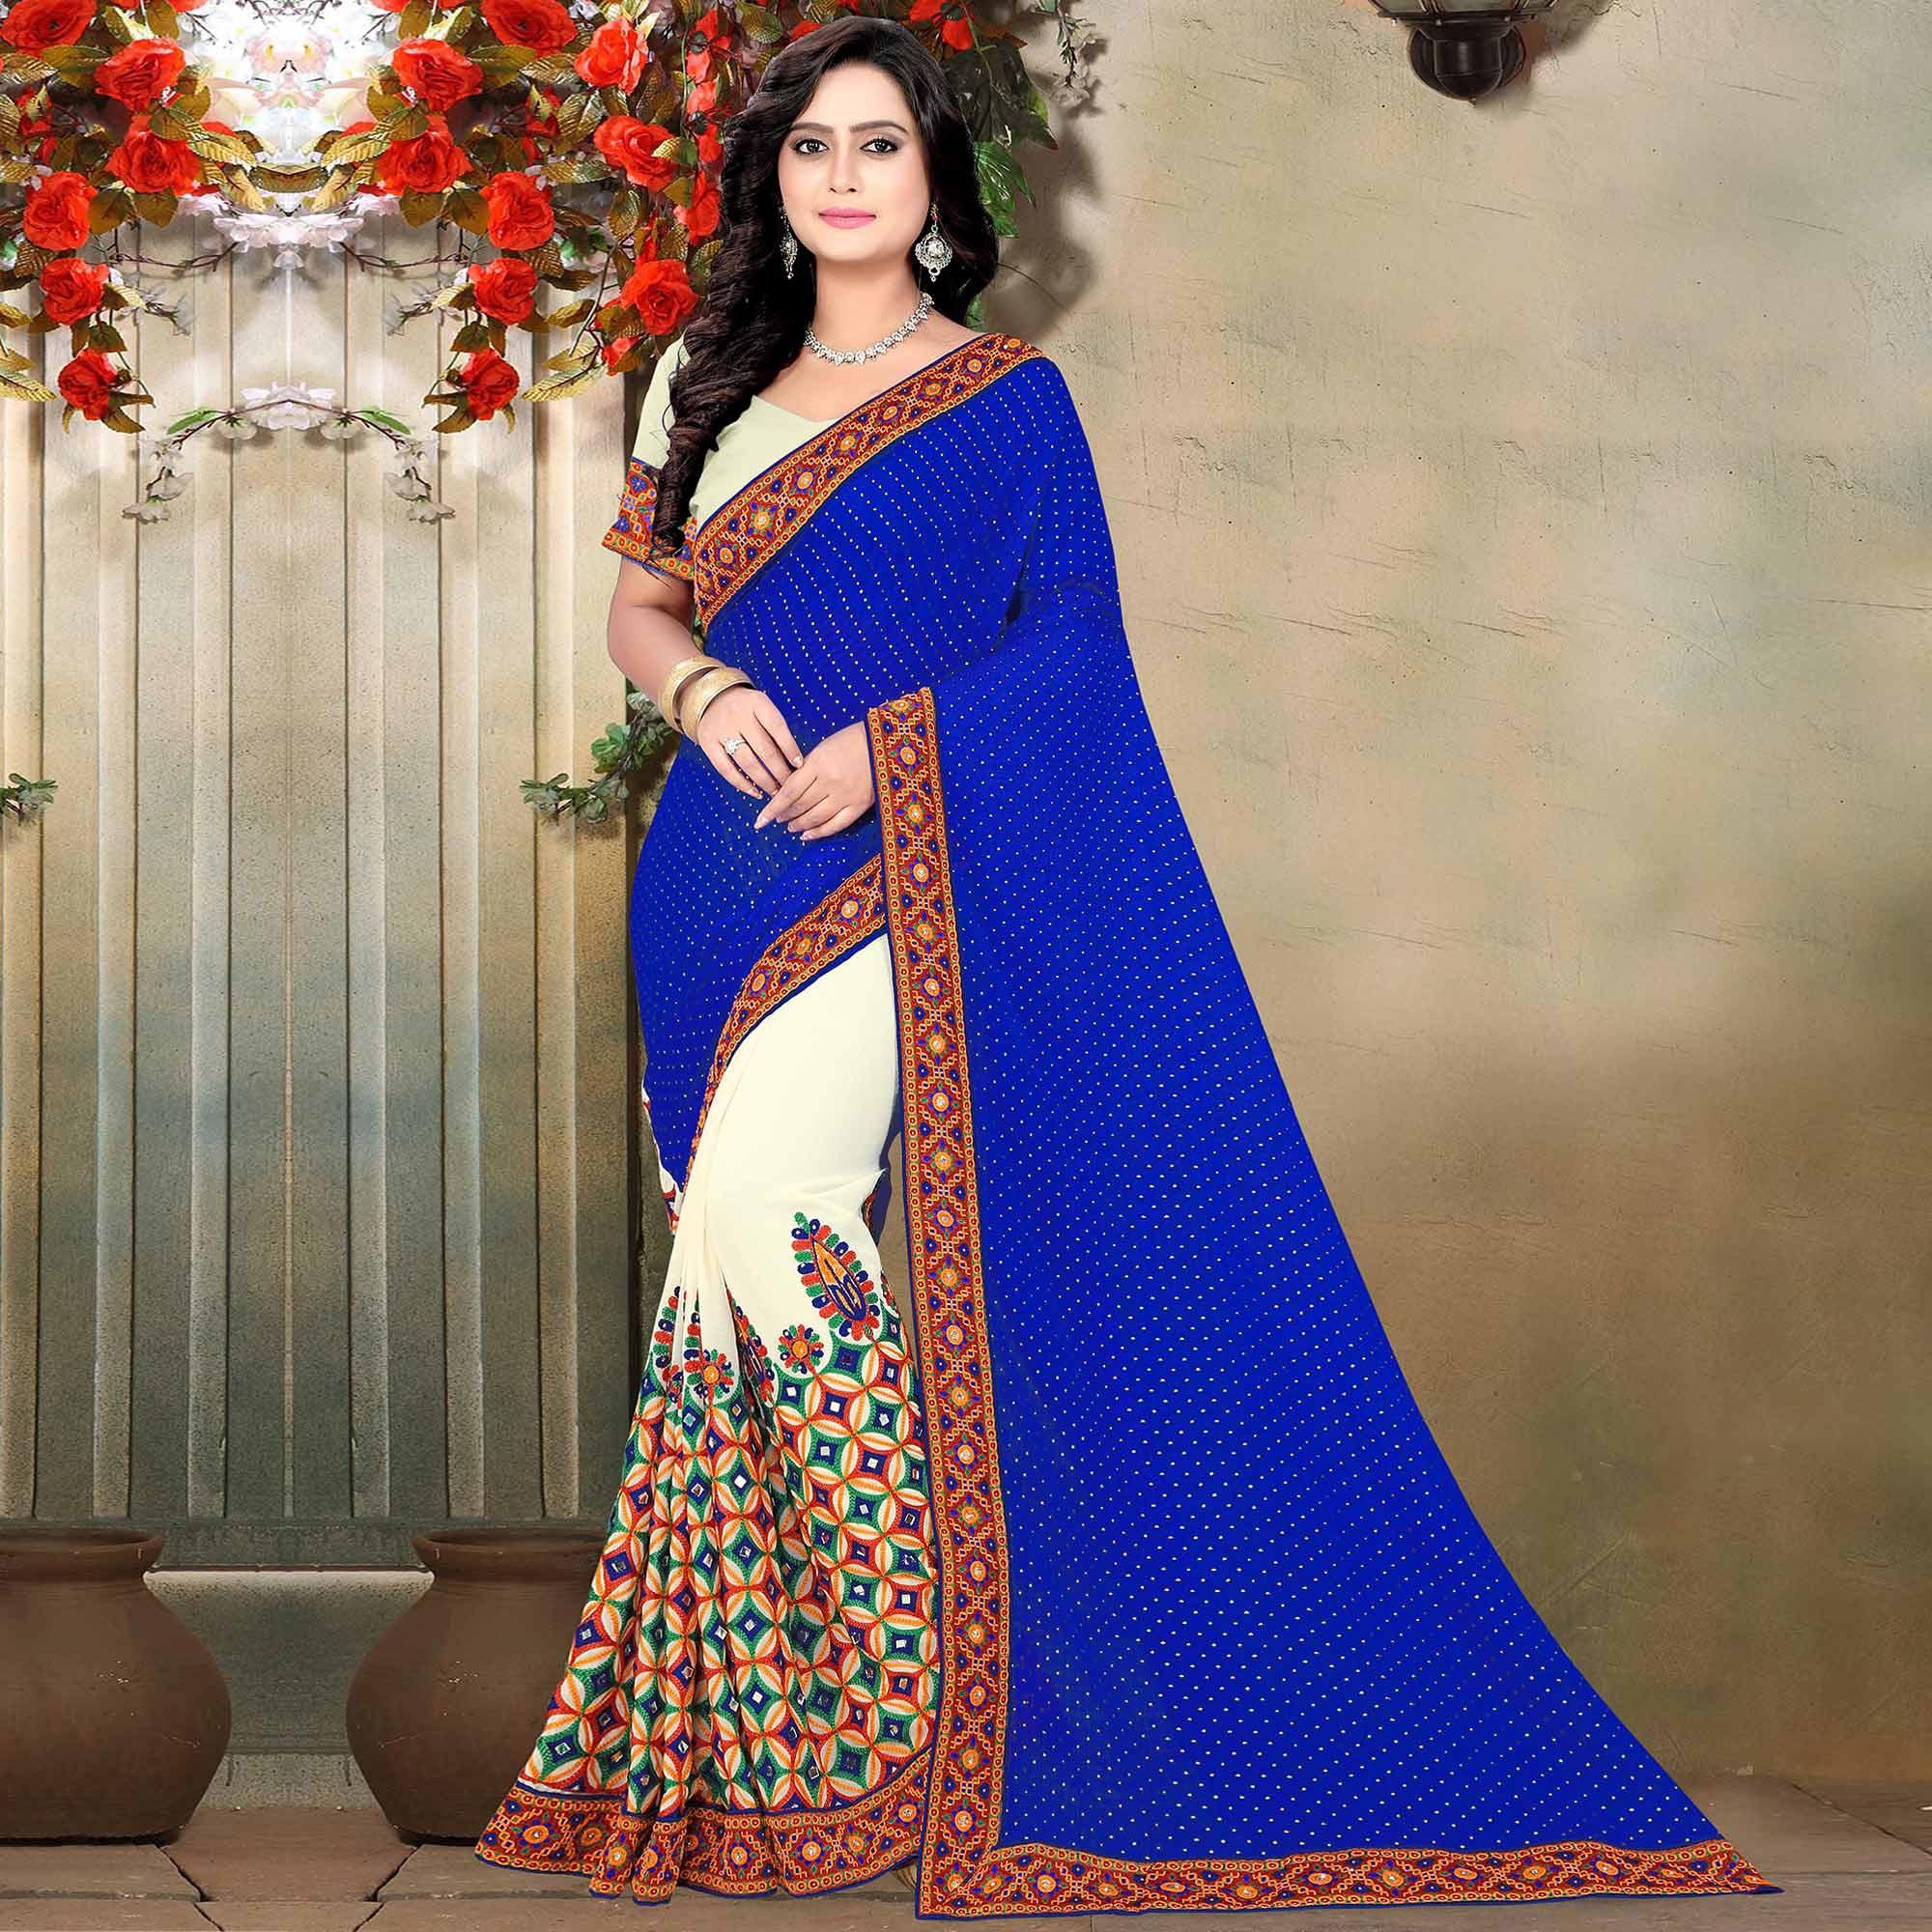 Riva Enterprise Women's Half And Half Blue And Off White Color Pallu Saree With Blouse - Peachmode